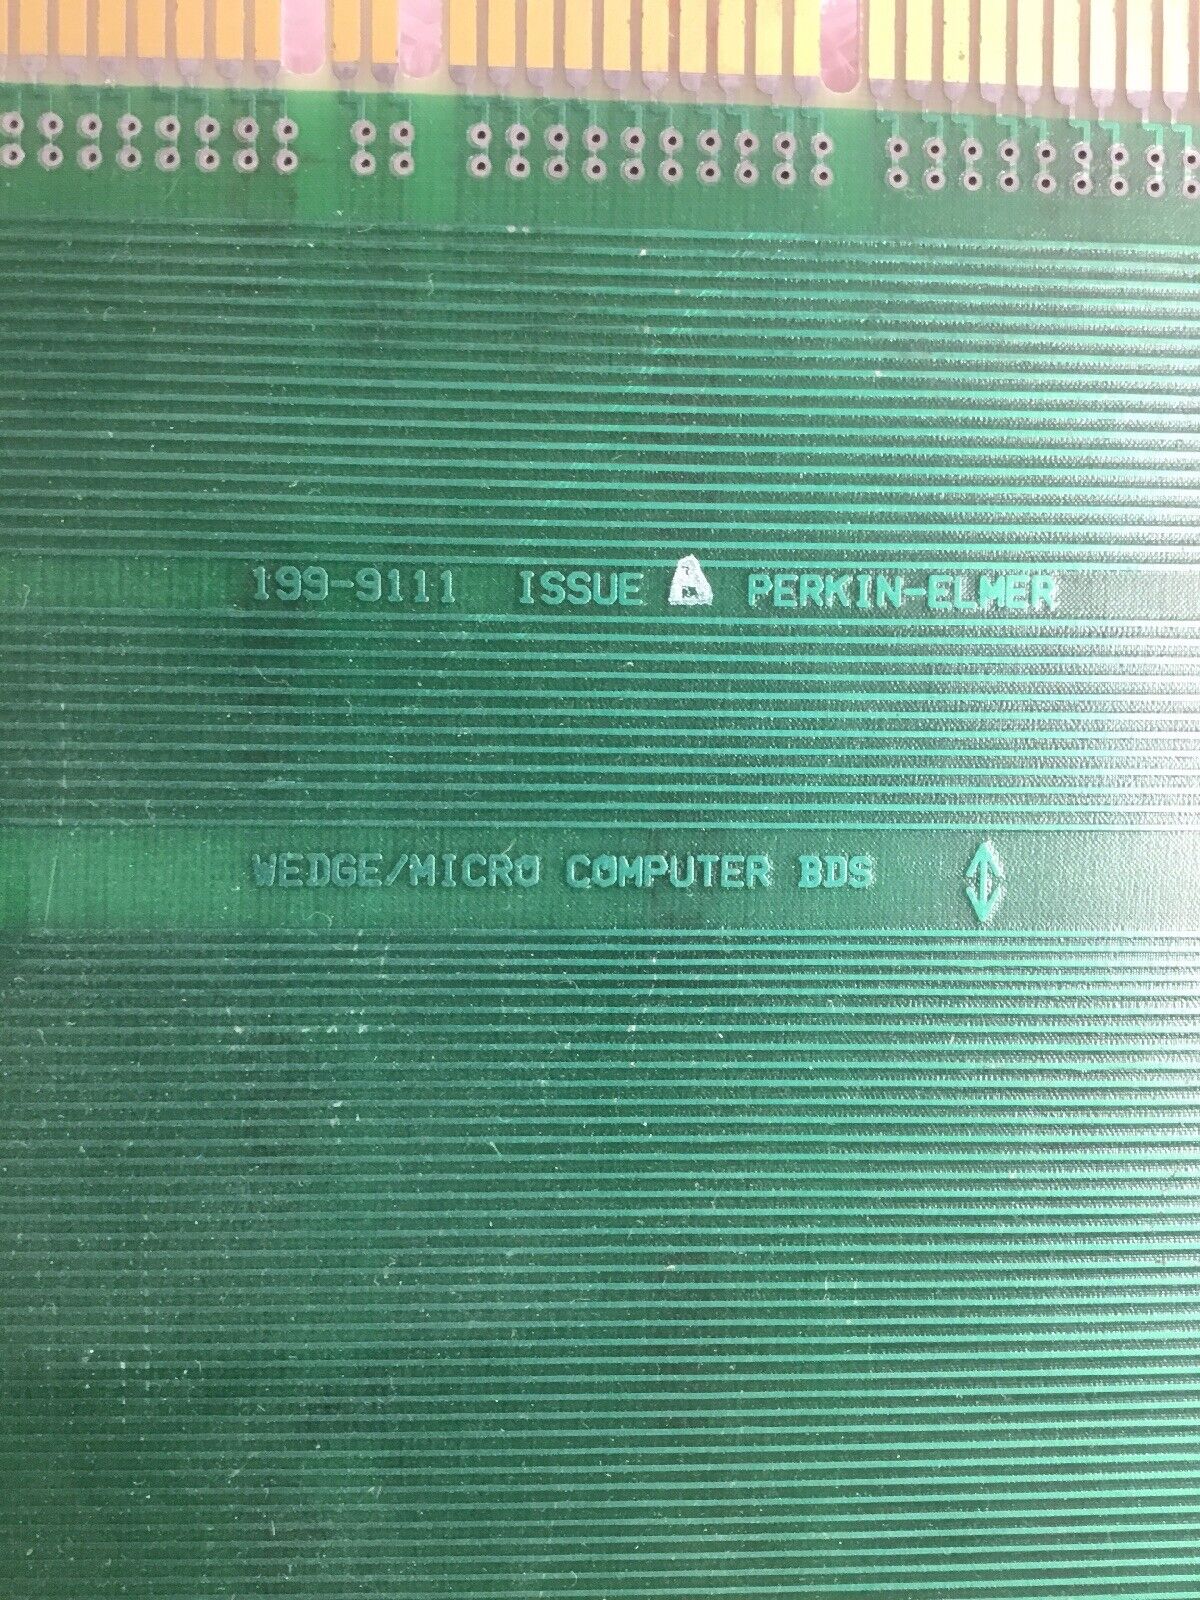 Perkin-Elmer 199-9111 Issue Pen/Cam-Chart Stepper BDS Wedge/Micro Computer Board